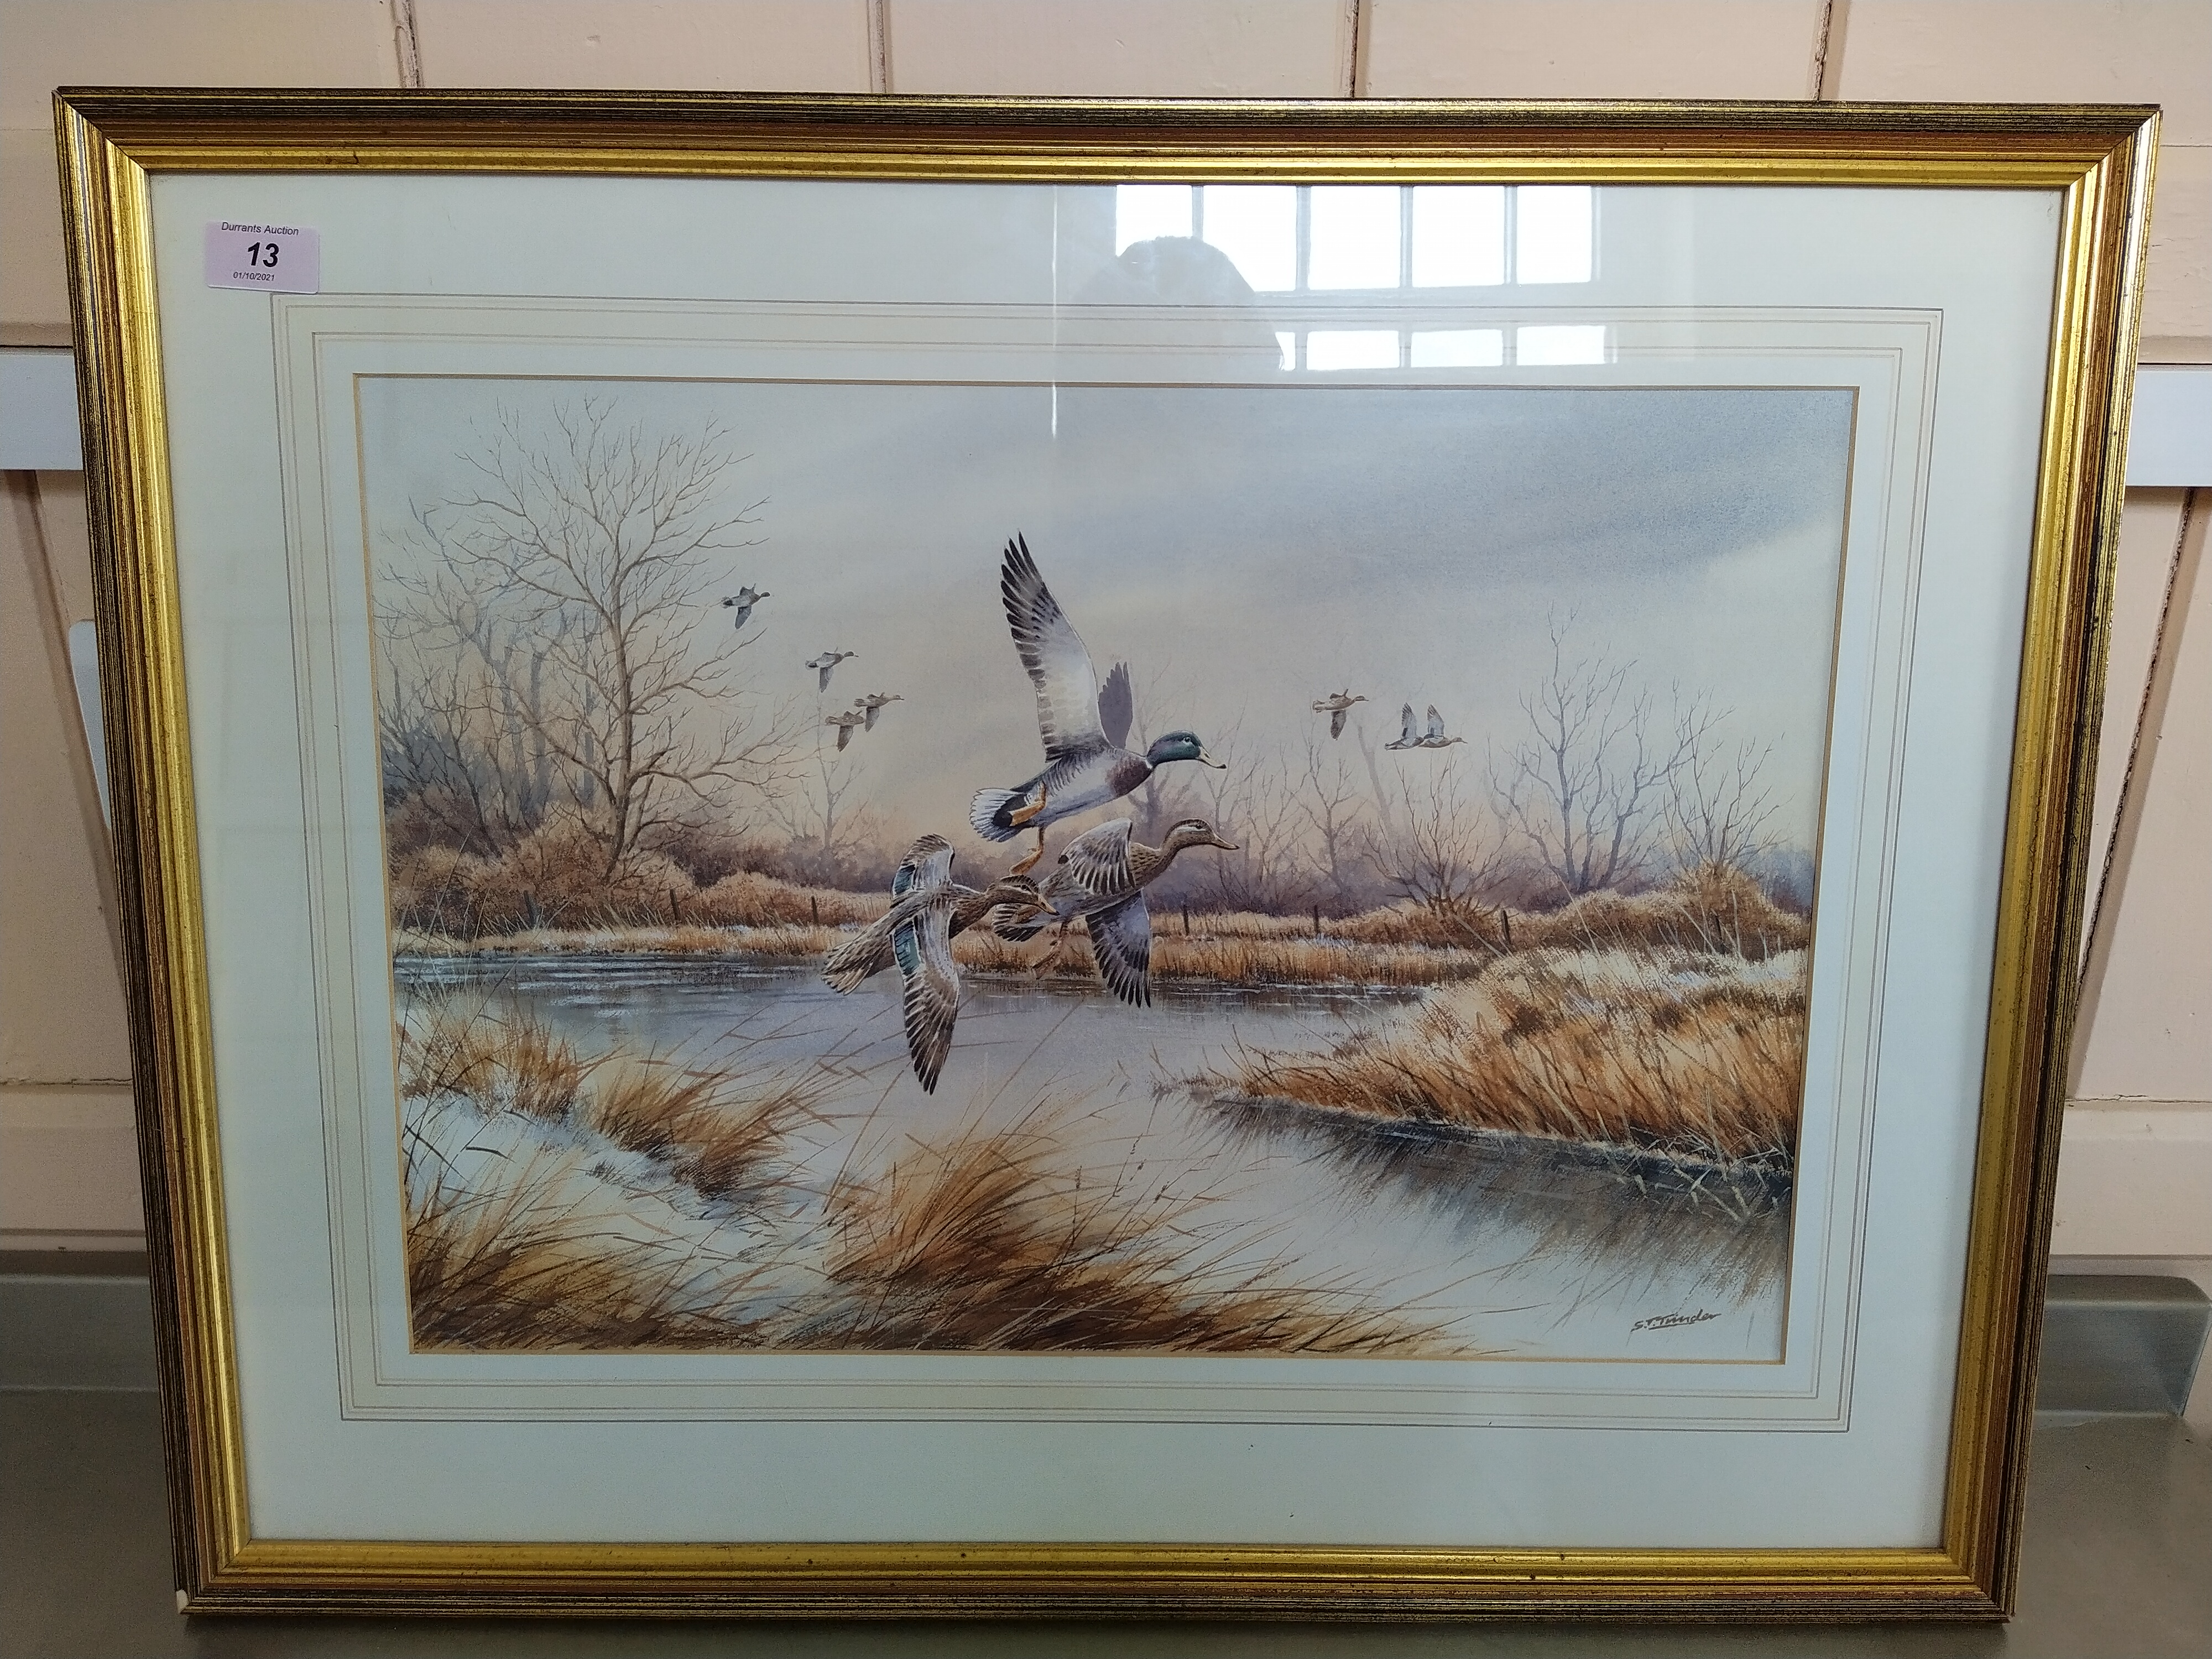 Simon T Trinder watercolour "Three Mallards" in flight in autumnal river scene,